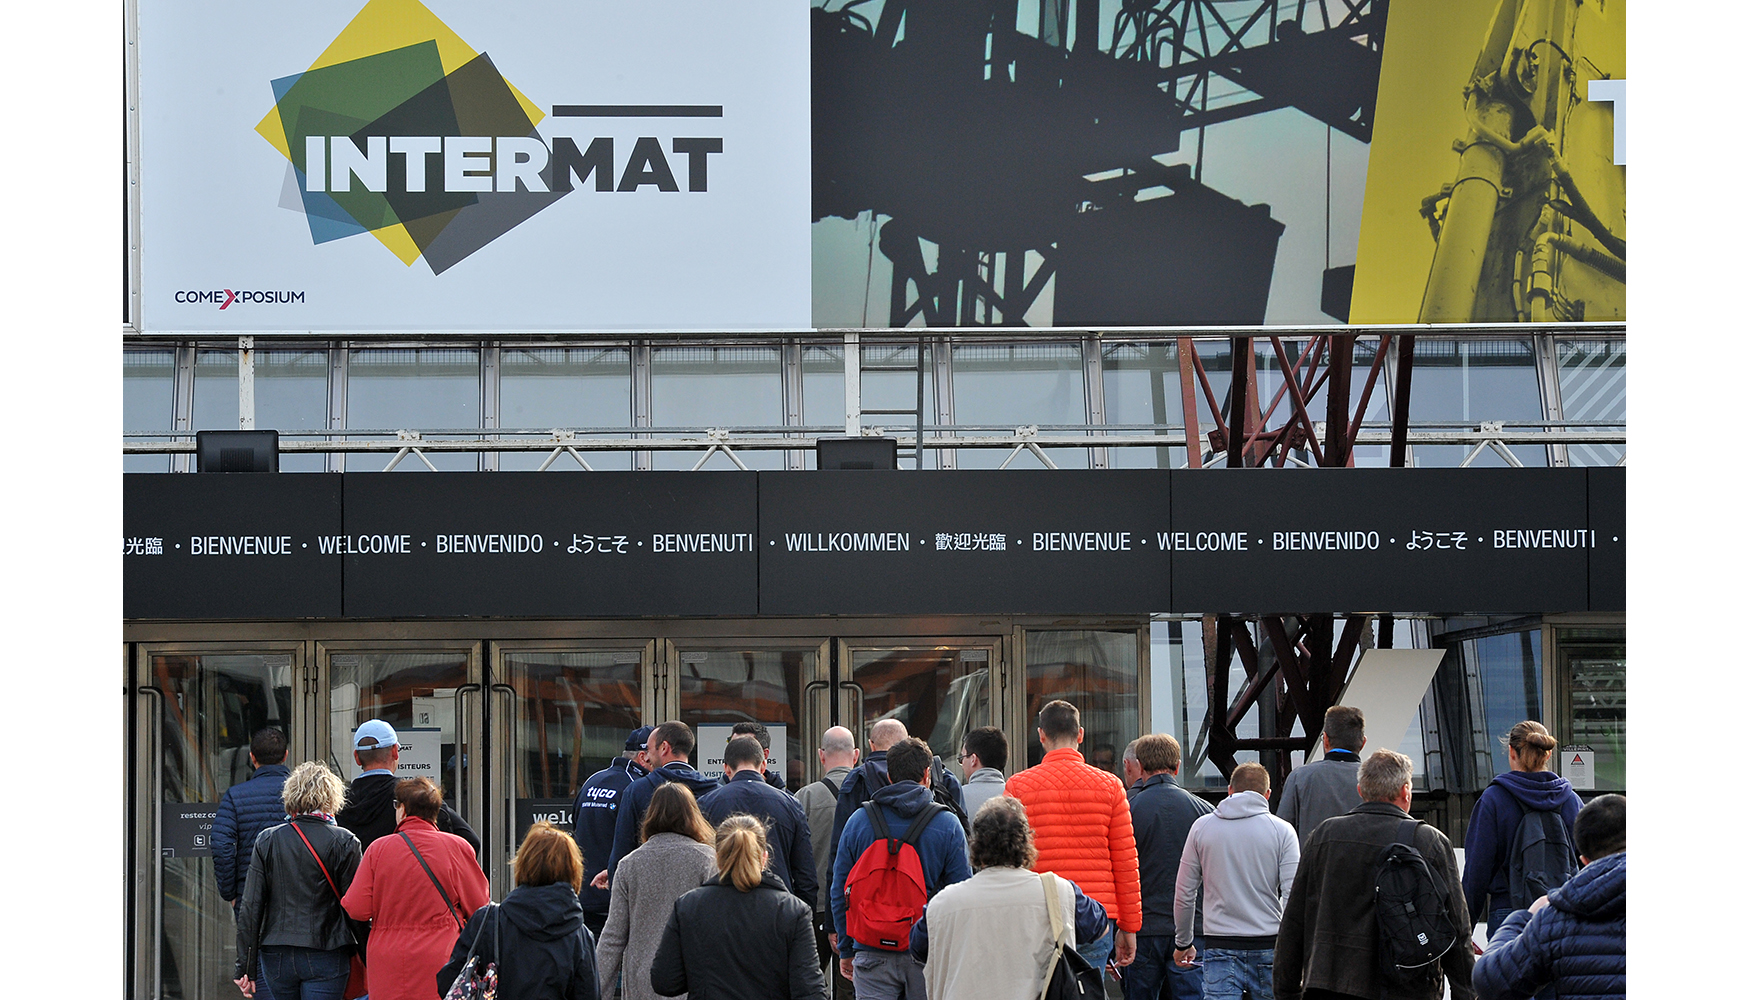 ltima edicin de Intermat, celebrada en 2018. Foto  Intermat